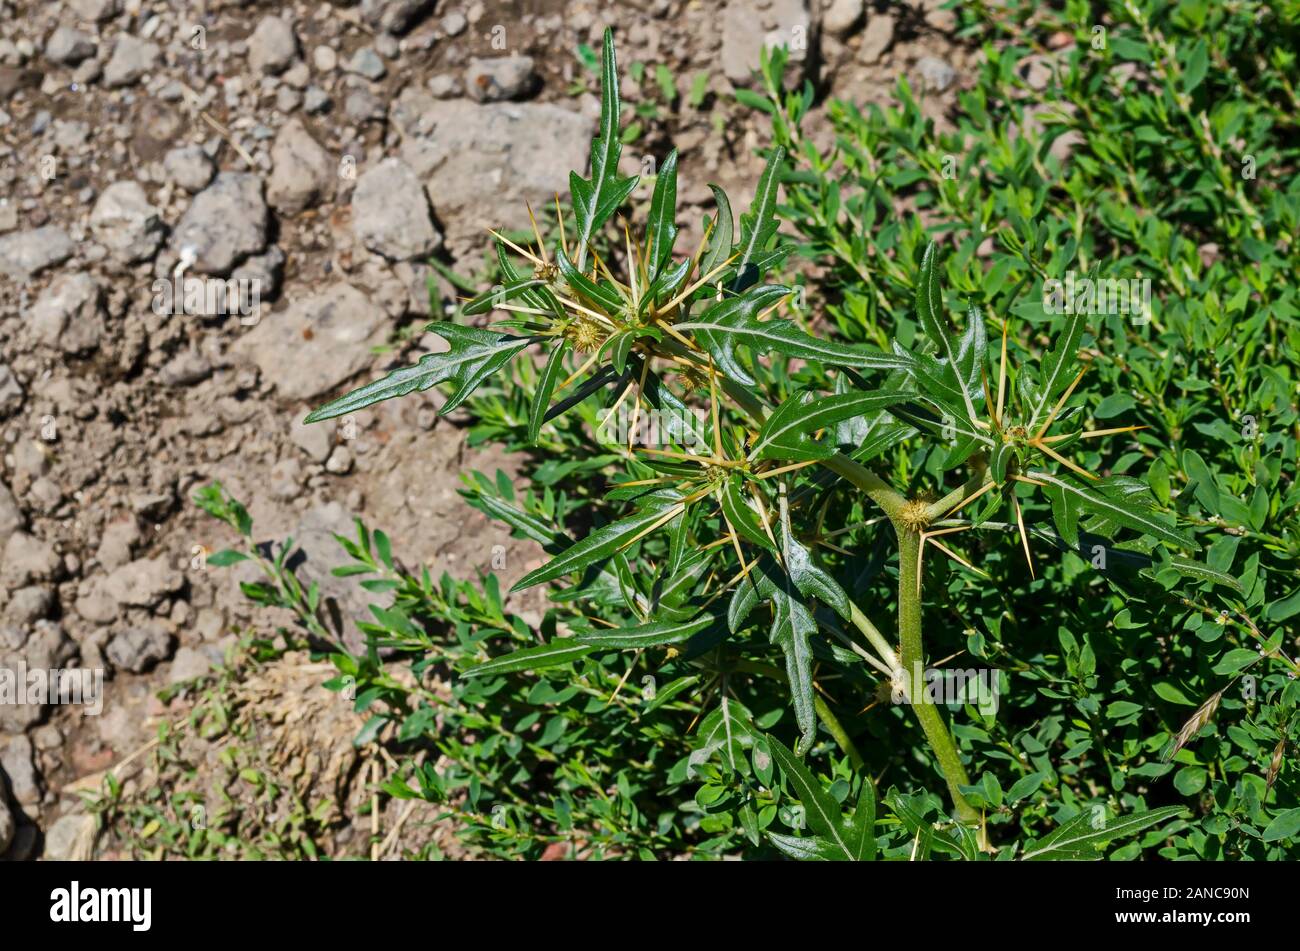 Xanthium spinosum or field thorn it medicinal plant with sharp yellow needles, village Zhelyava, Bulgaria Stock Photo